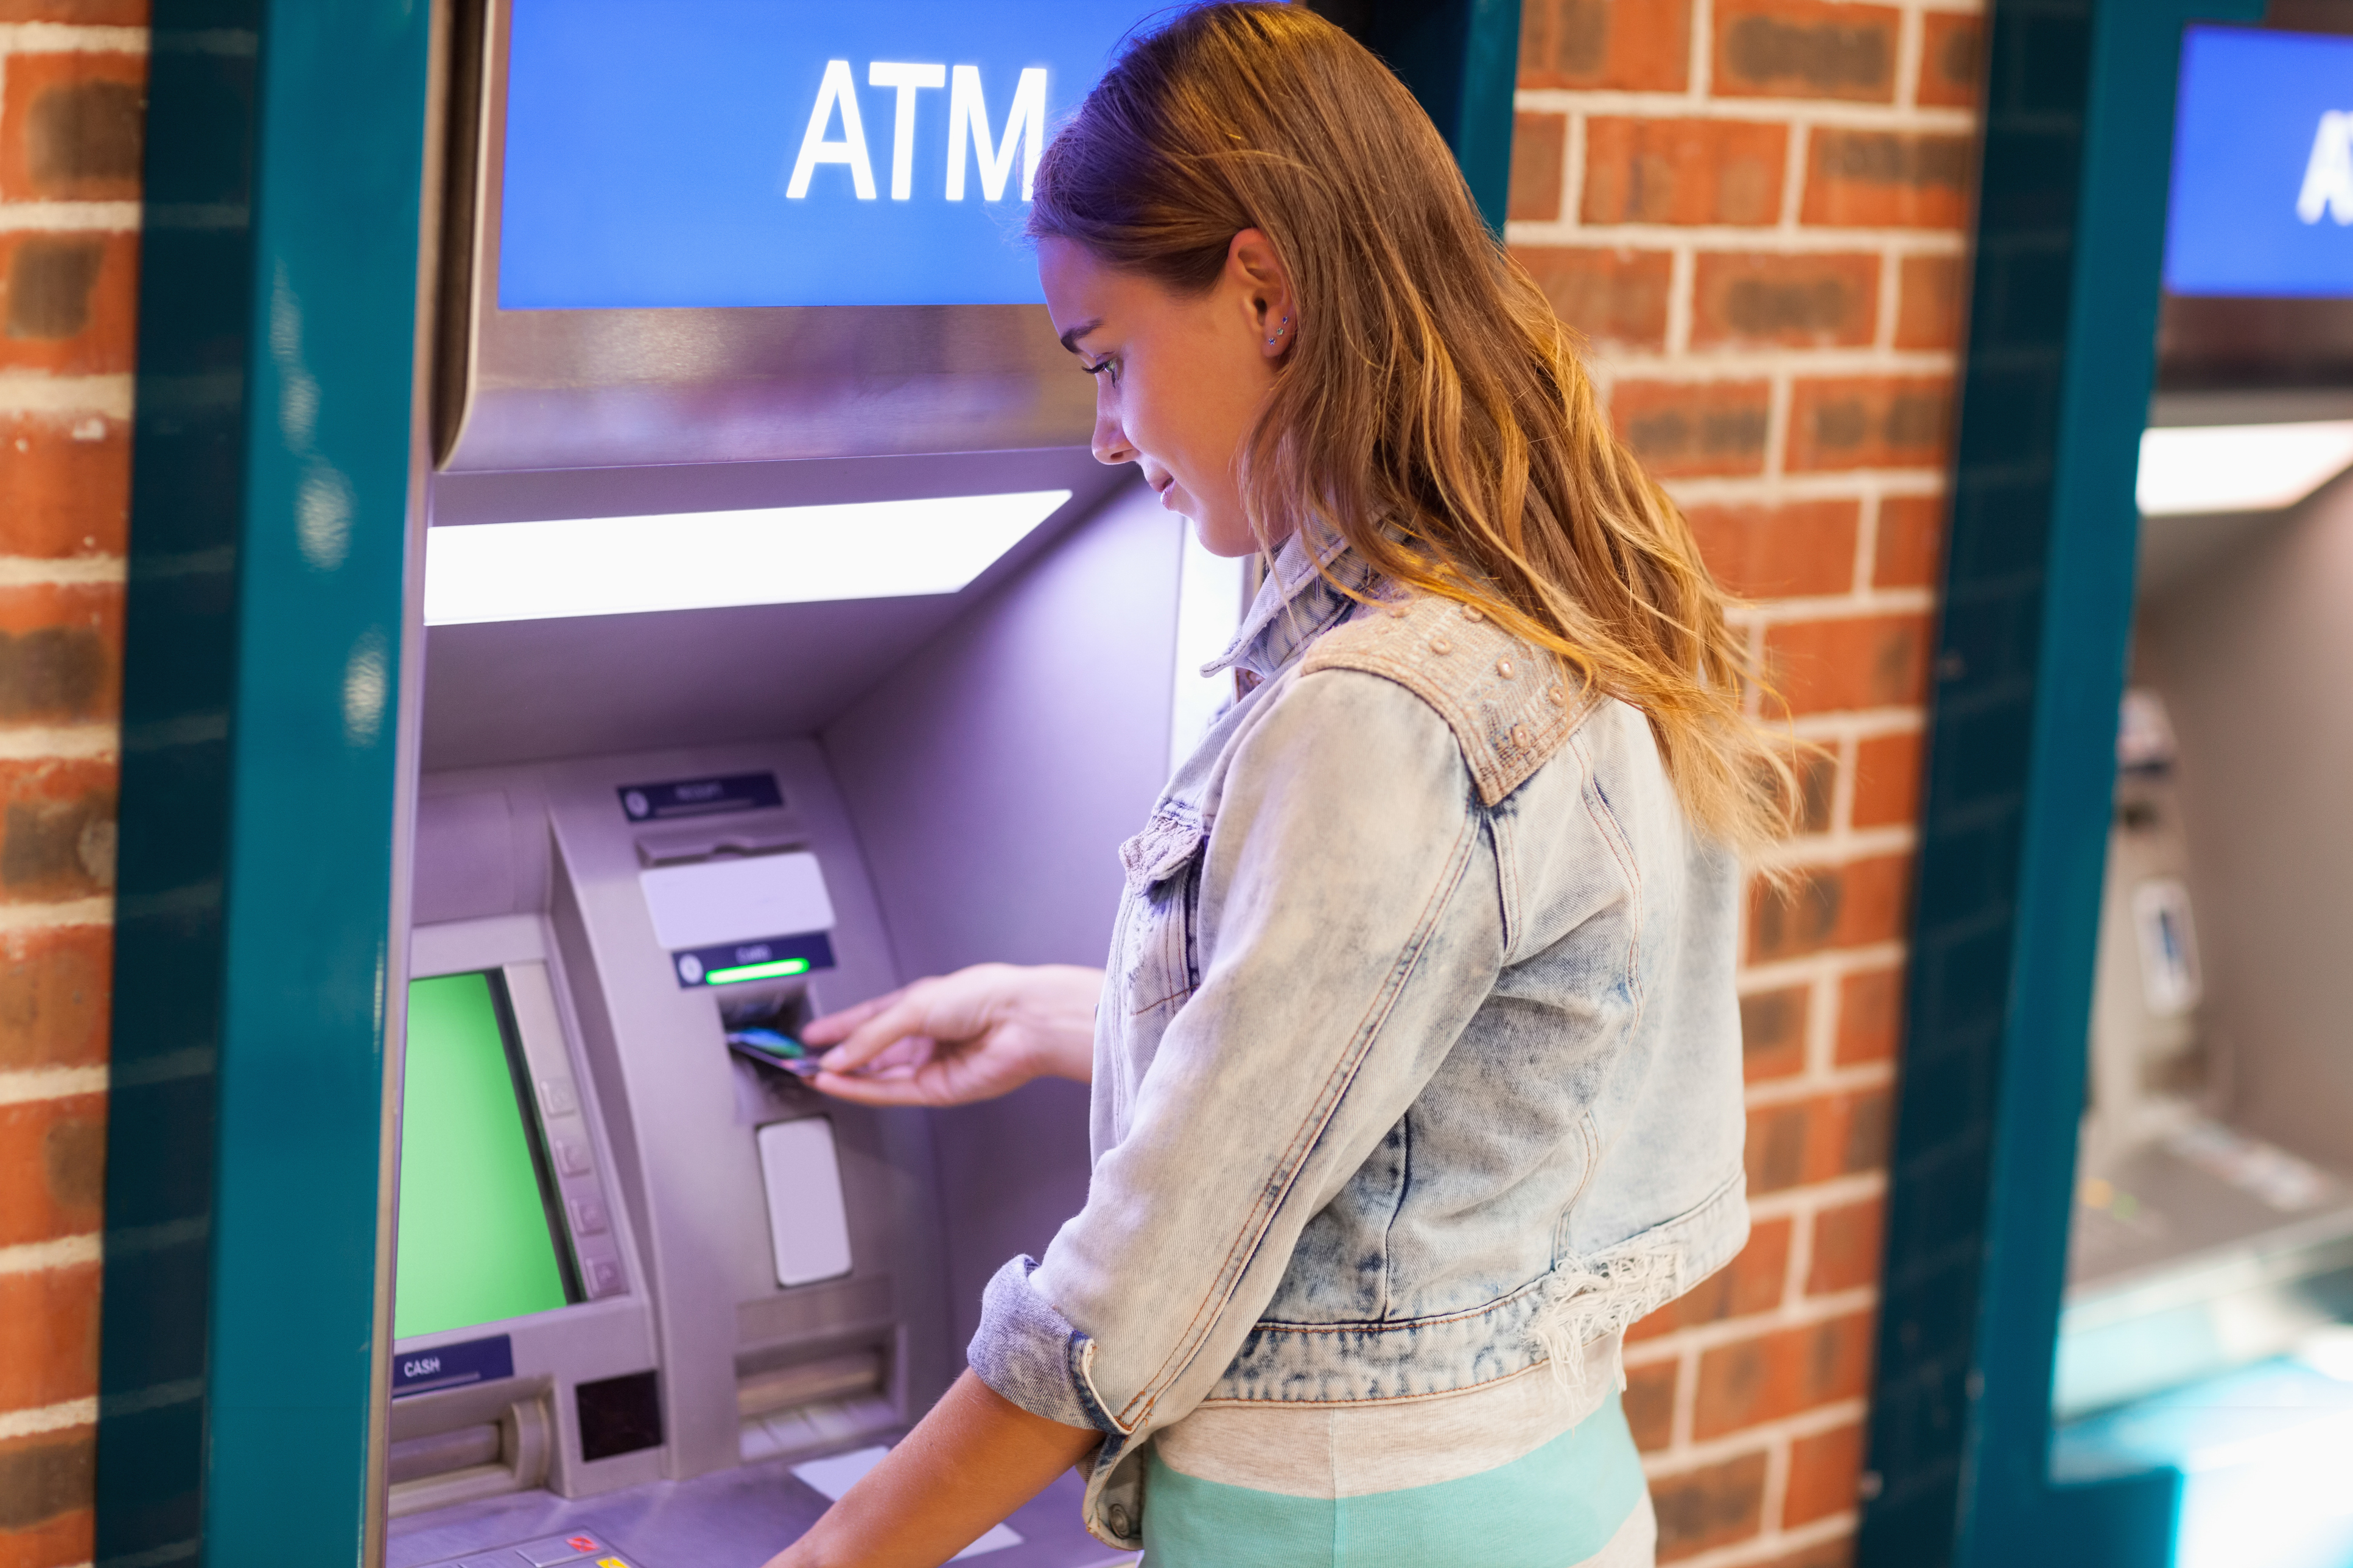 T me dump atm. Банкомат. Банкомат (ATM). Девушка возле банкомата. Человек у банкомата.